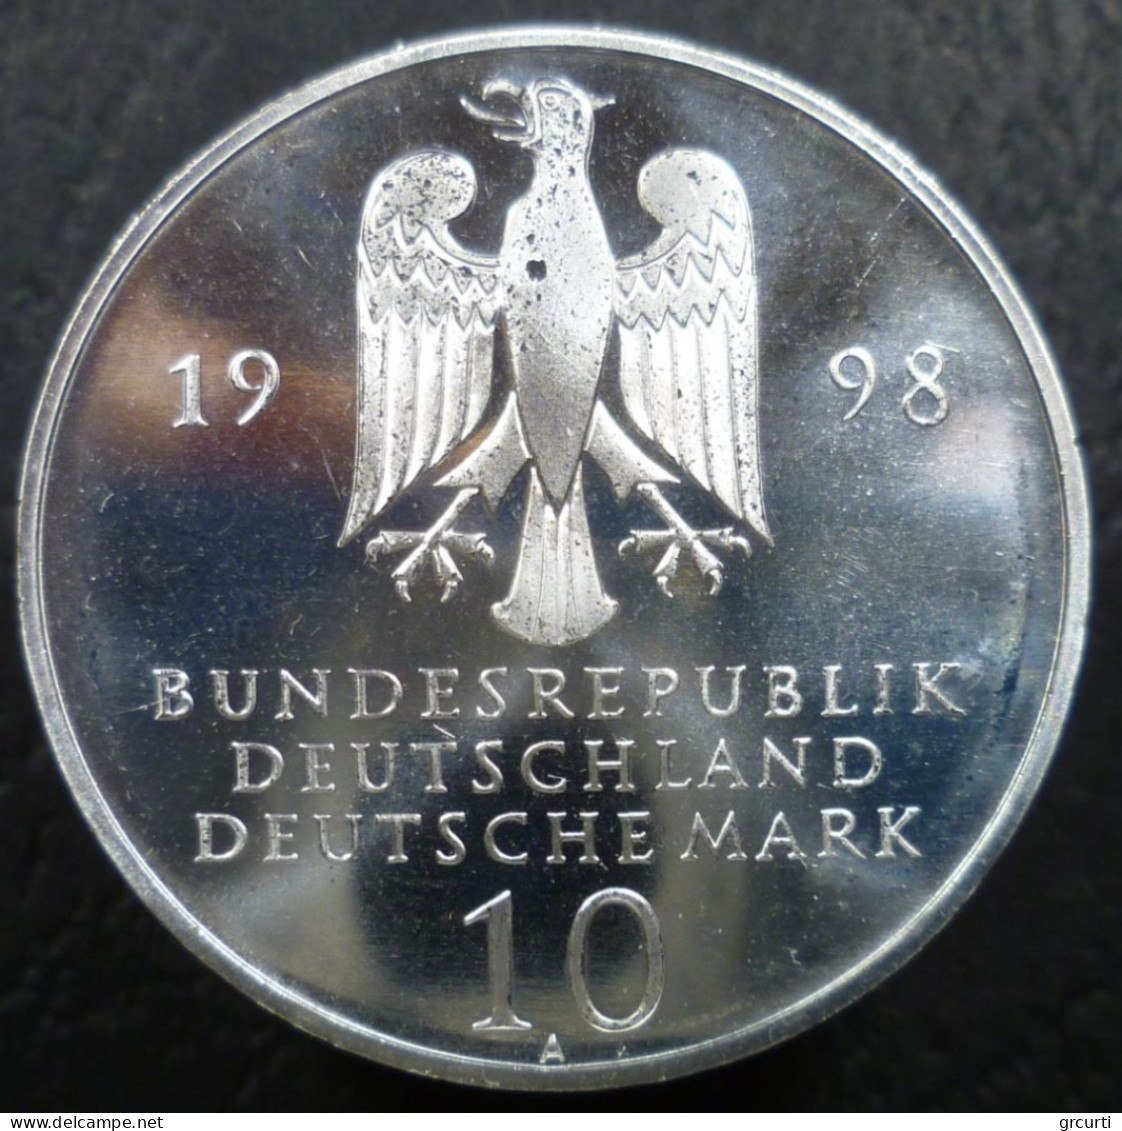 Germania - RFT - 10 Mark 1998 A - 300° Franckesche Stiftungen - KM# 194 - 10 Mark